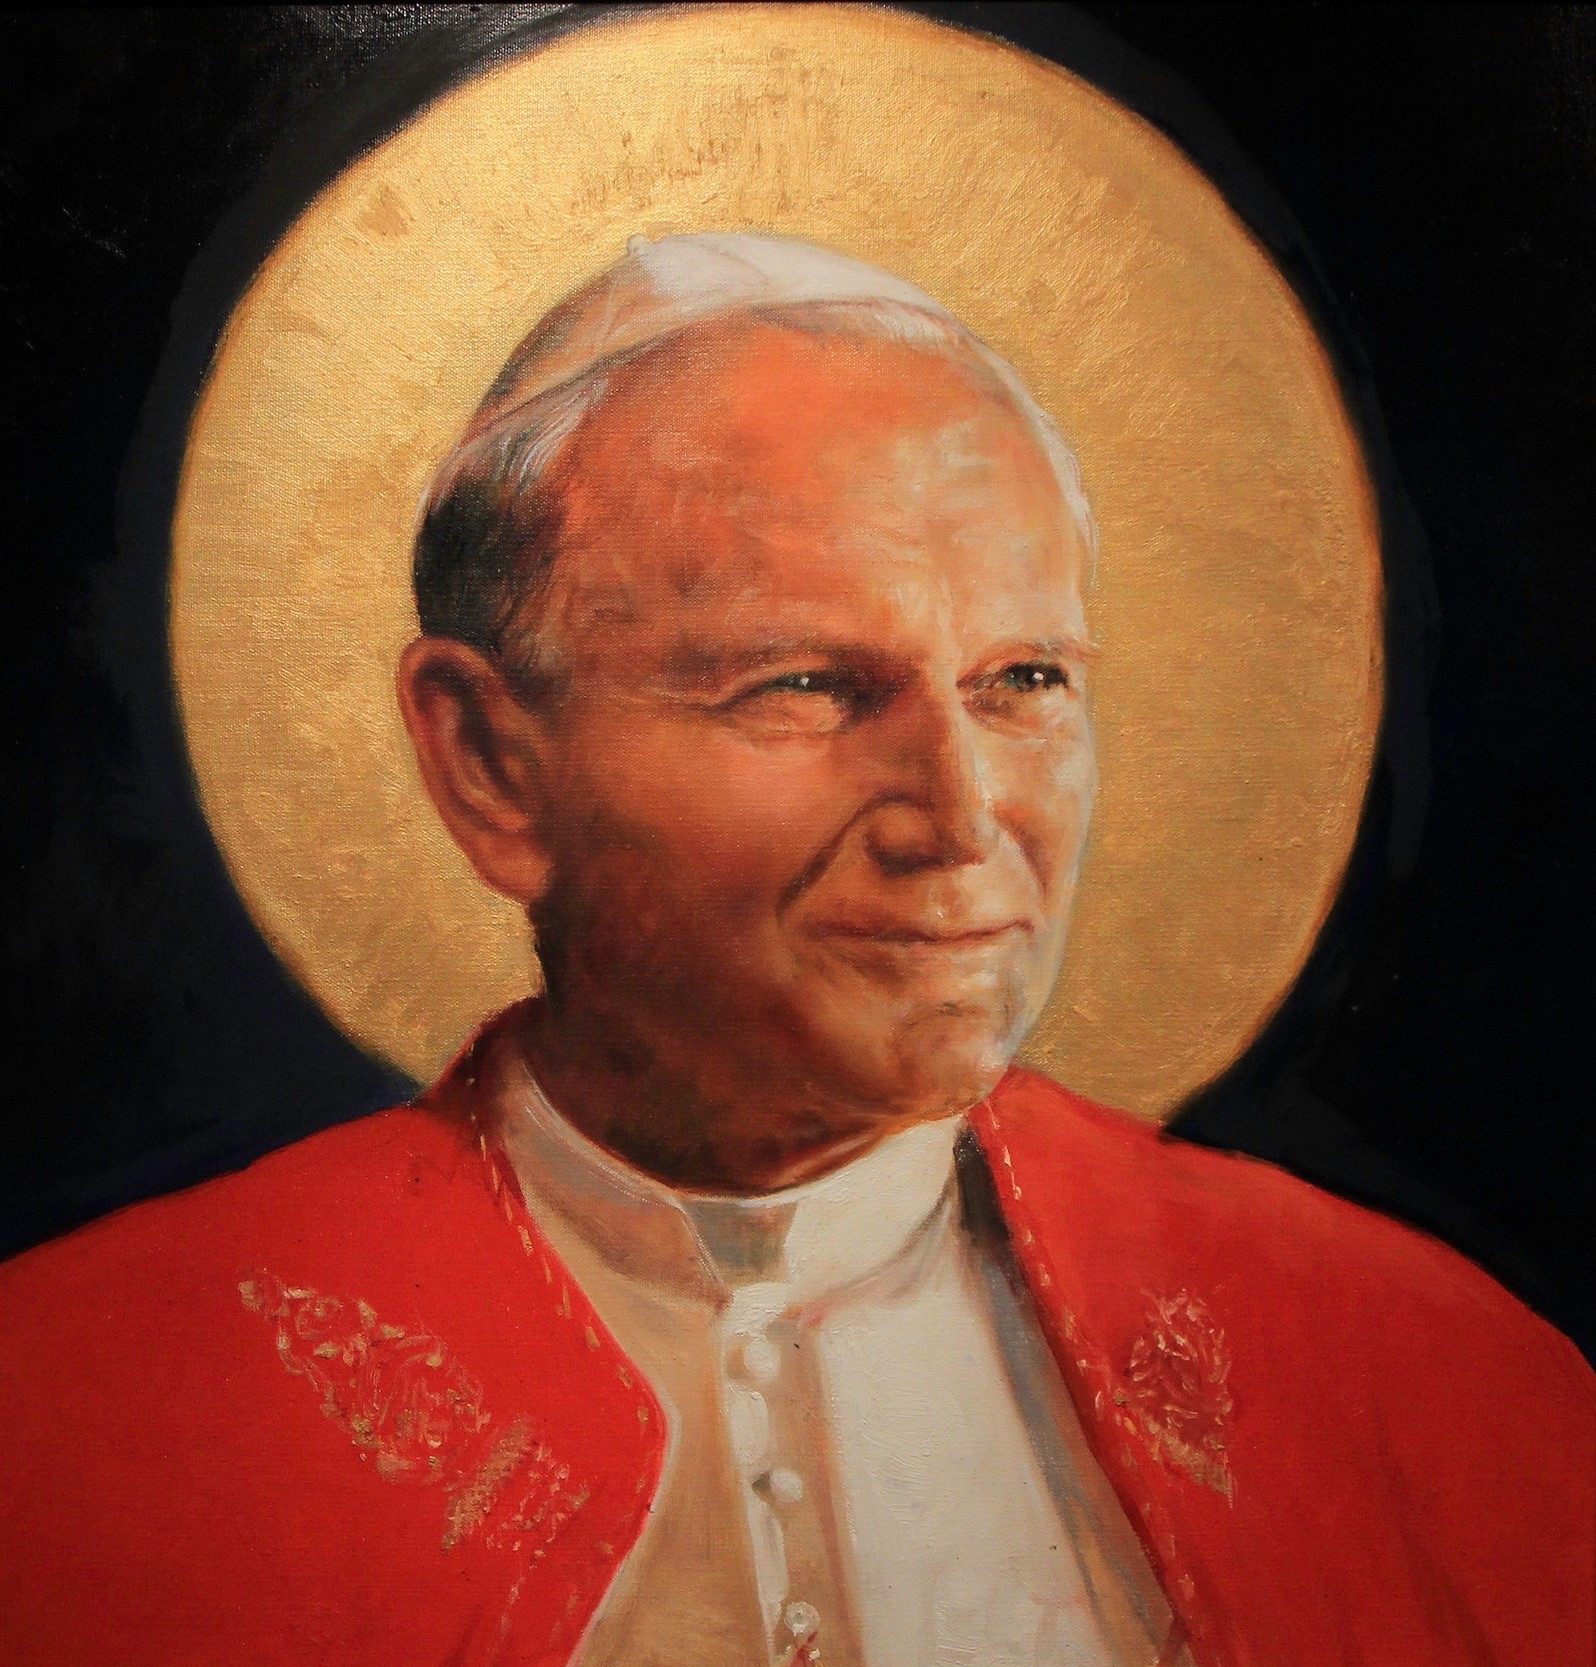 St. Pope John Paul II: WOMAN OF FAITH